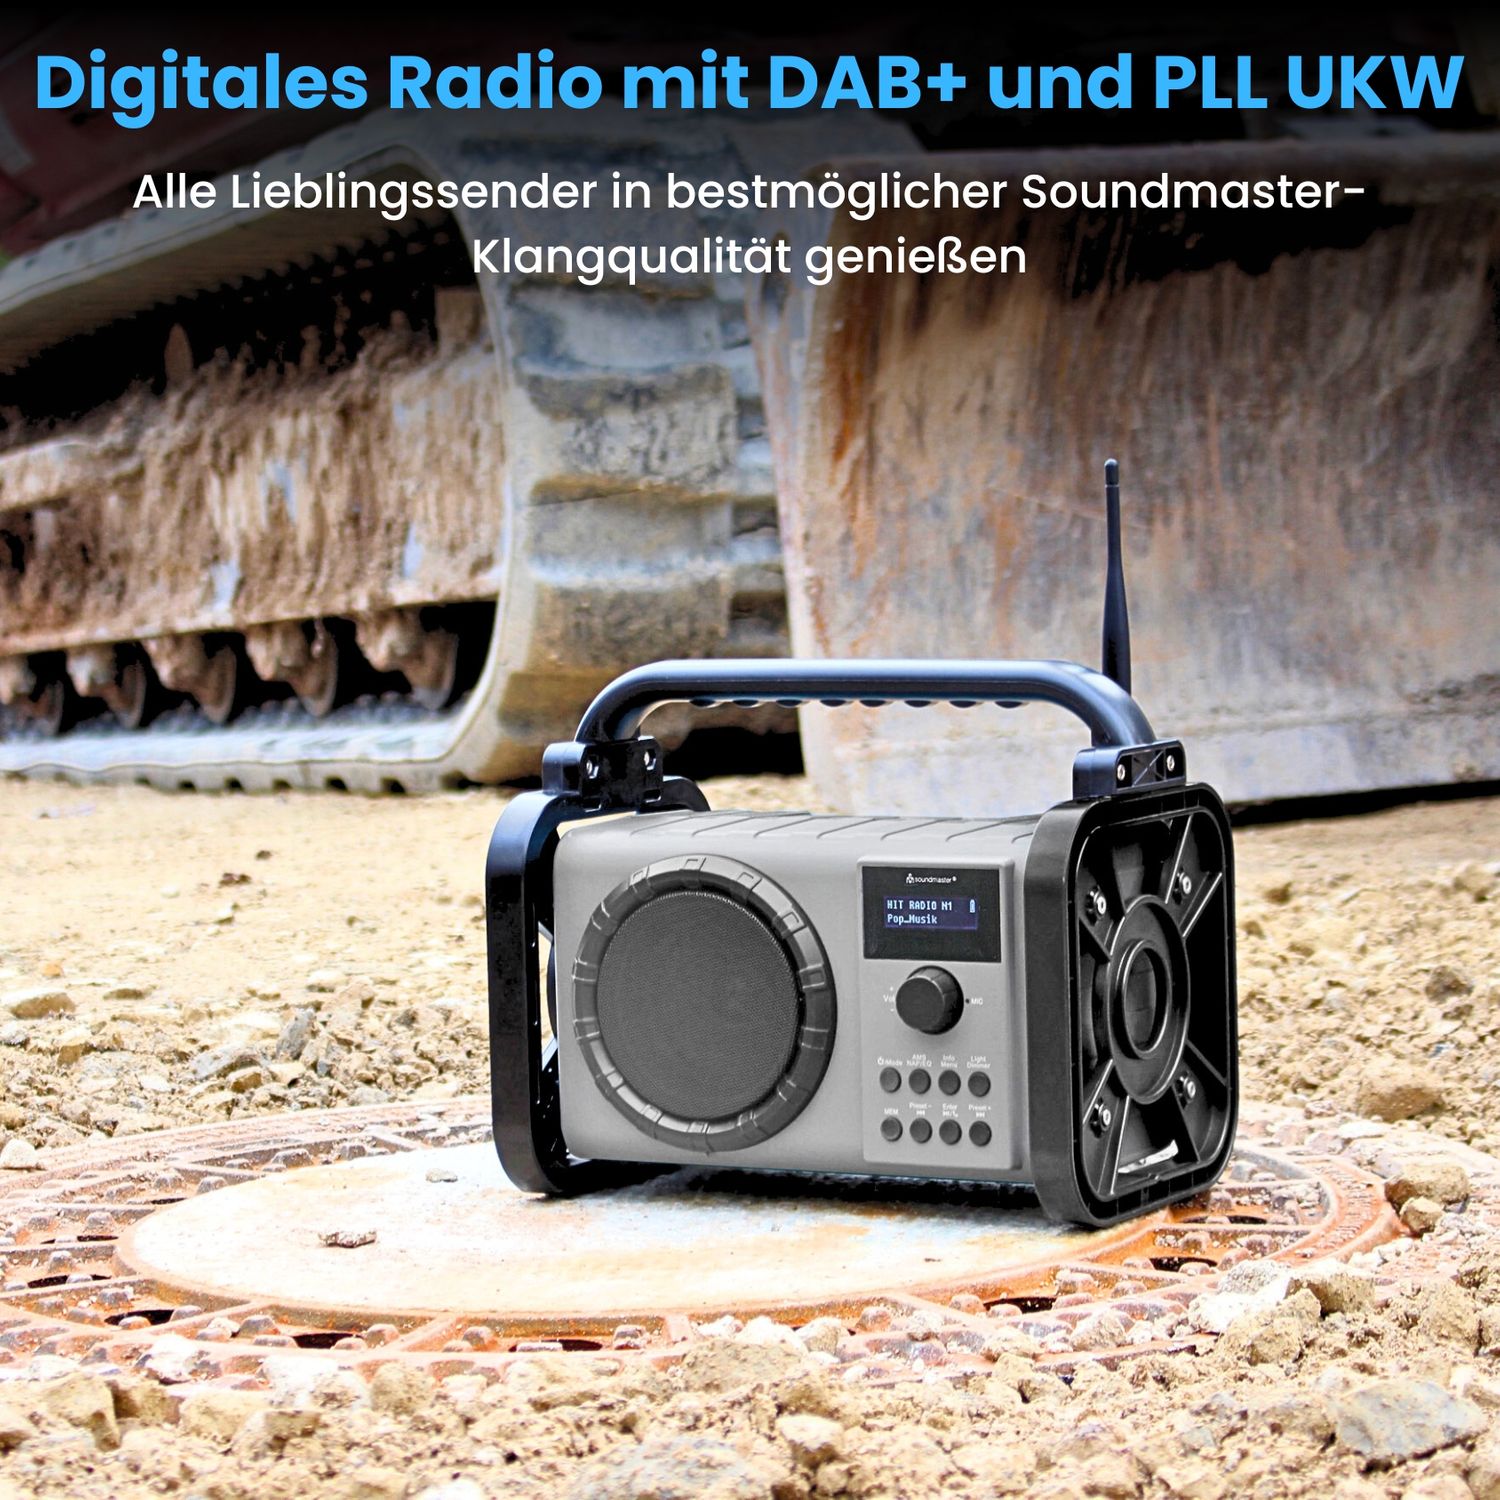 Soundmaster DAB80SG construction site radio with DAB+ FM Bluetooth and Li-Ion battery IP44 dust and splash-proof